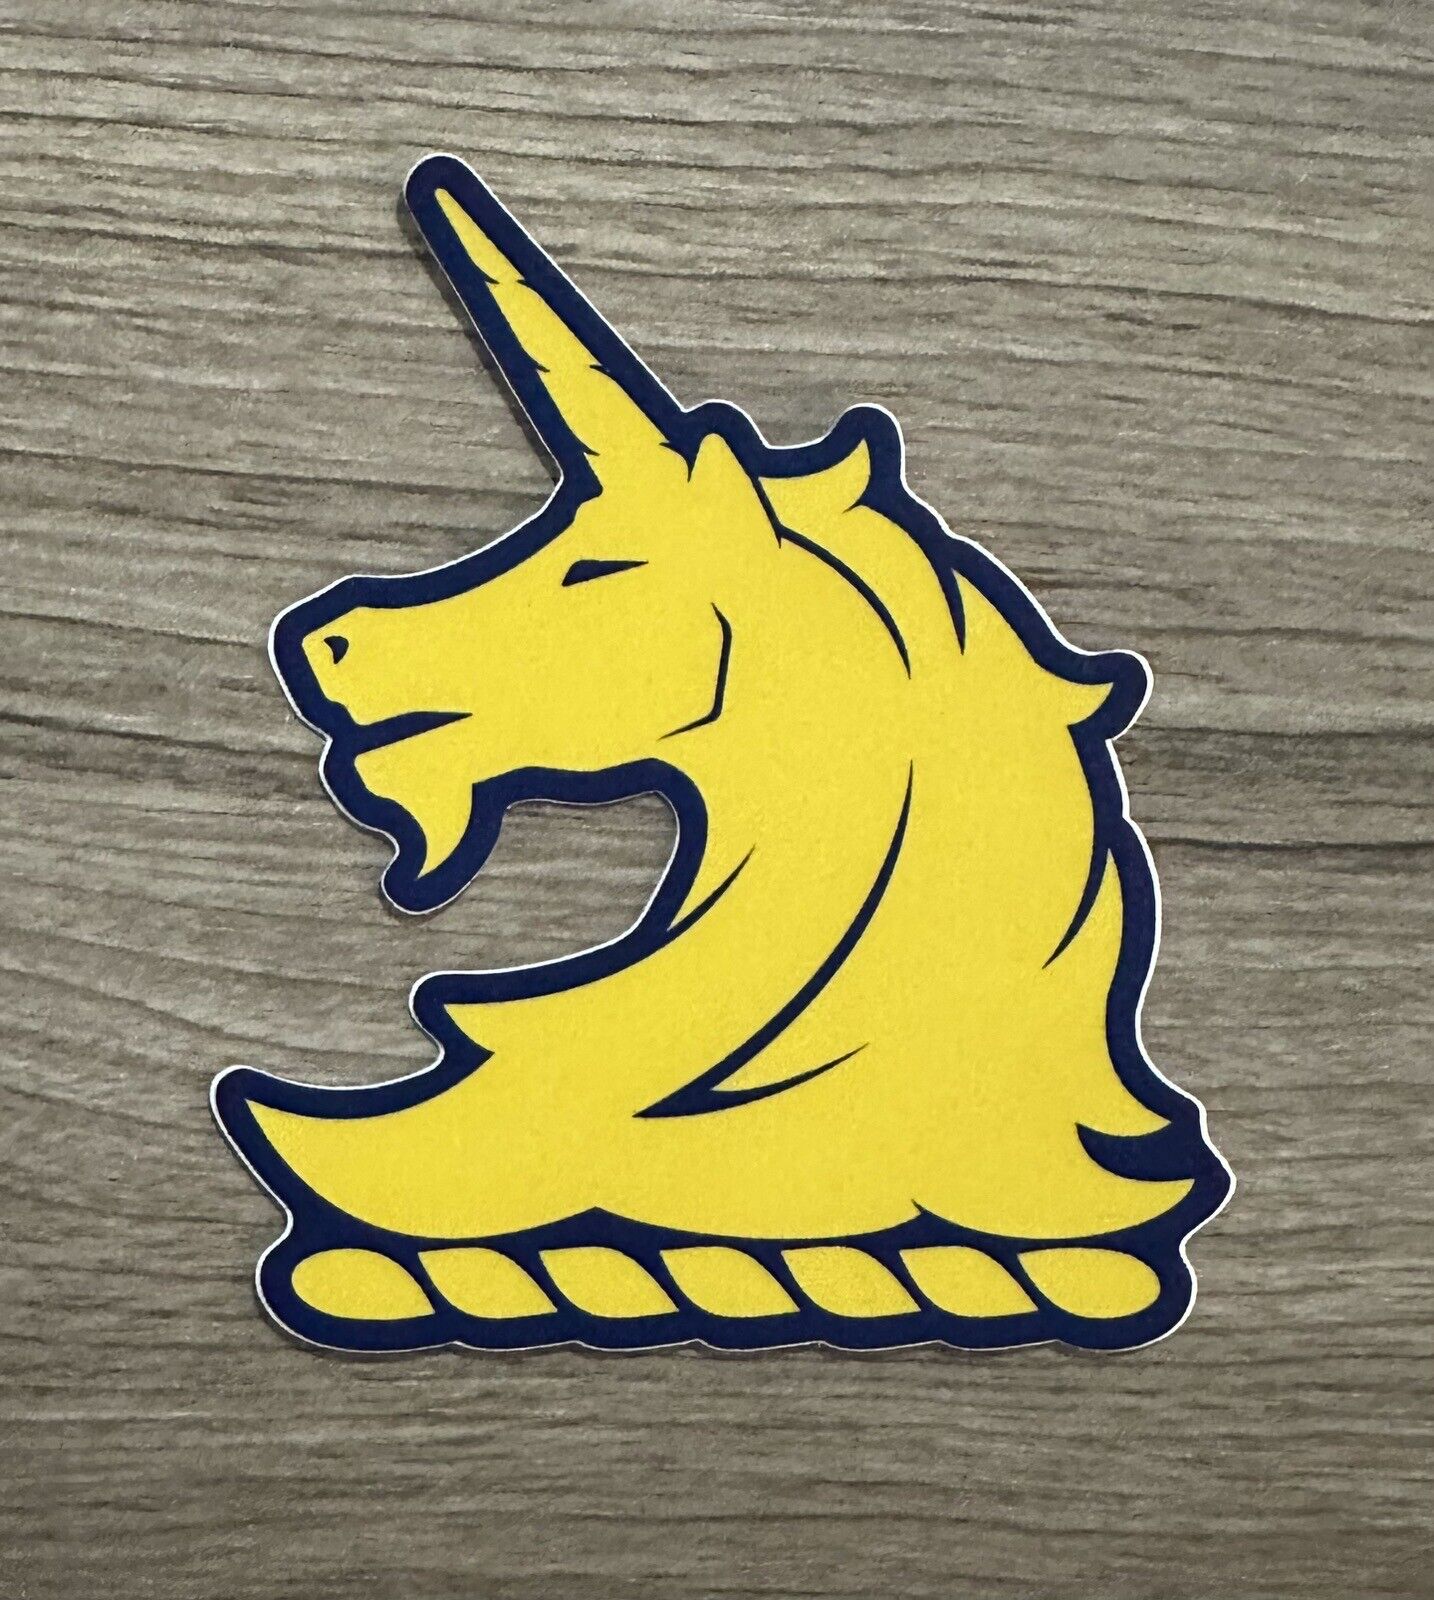 Boston Marathon AUTHENTIC Yellow Unicorn Sticker Decal Official Rare